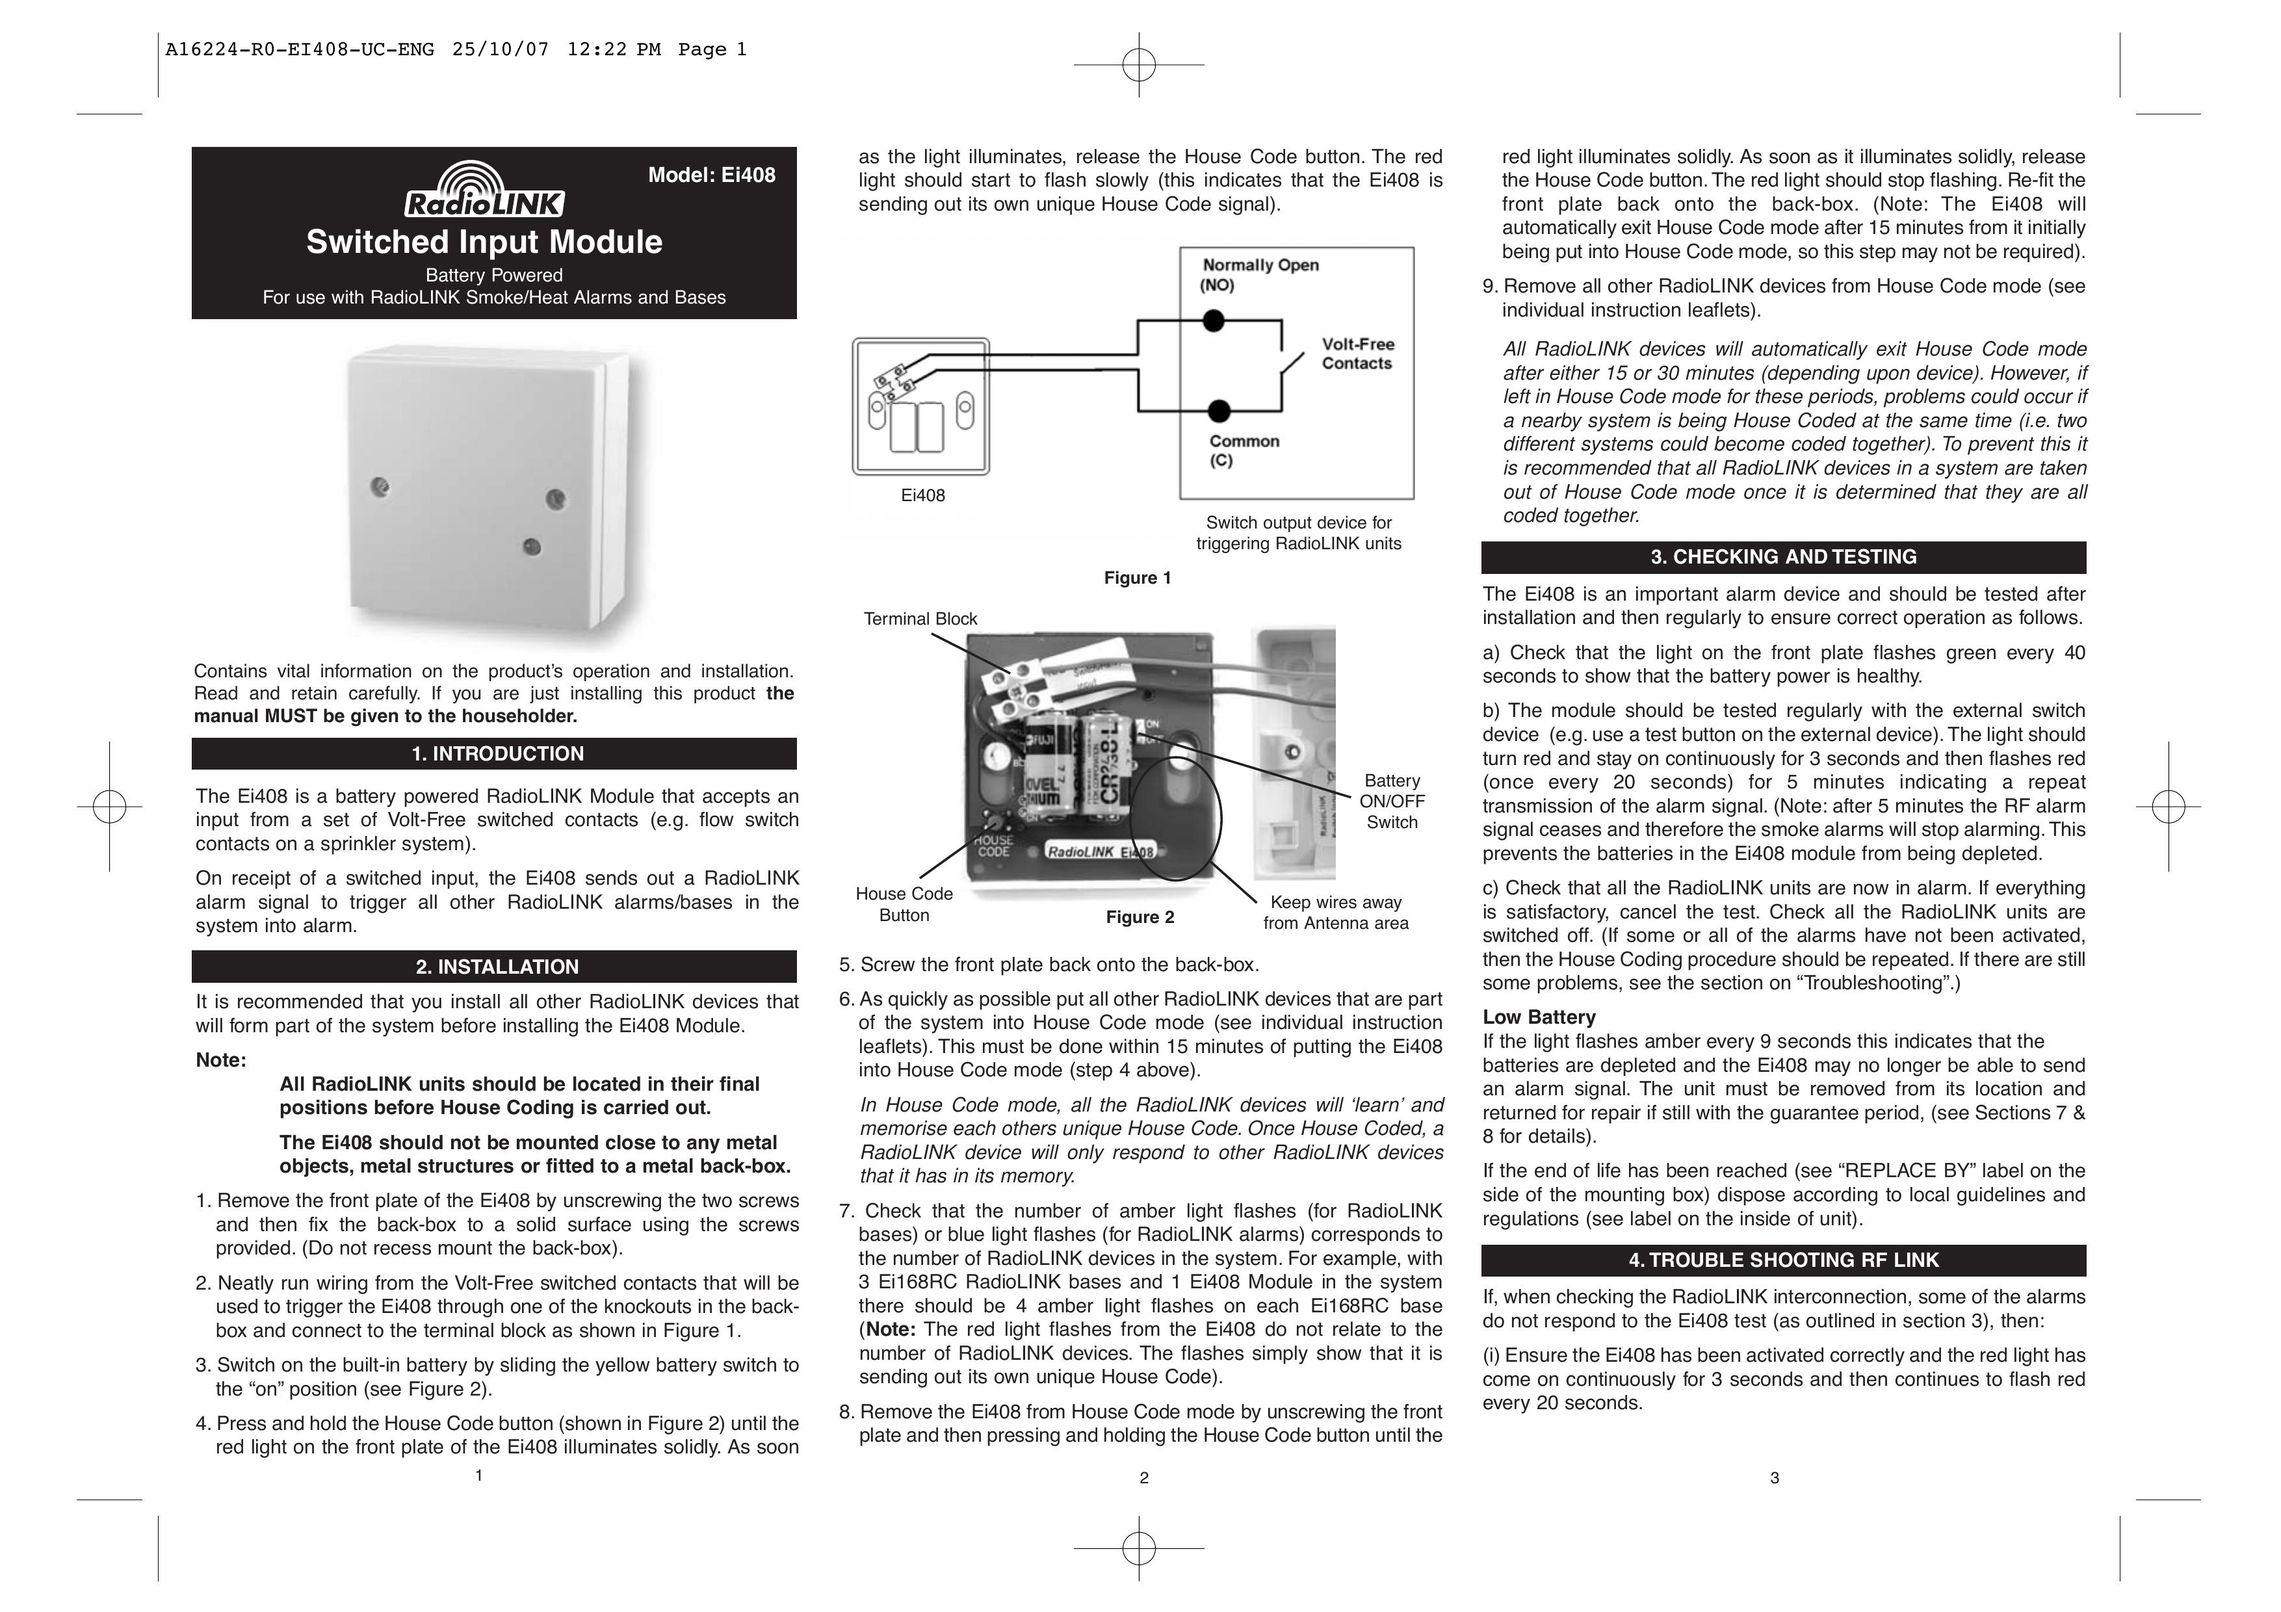 Ei Electronics Ei408 Switch User Manual